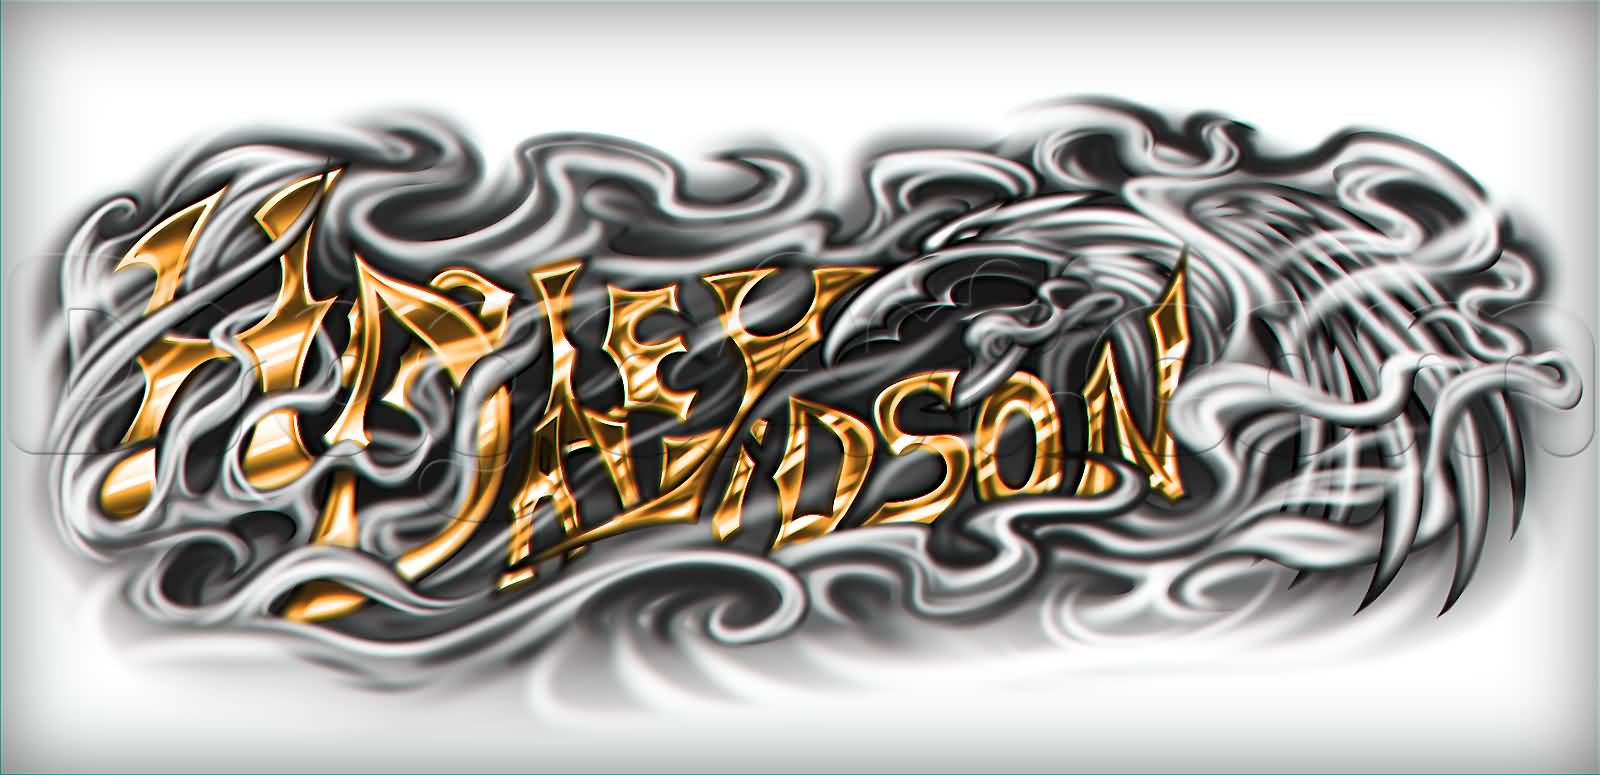 Awesome Harley Davidson Words Tattoo Design